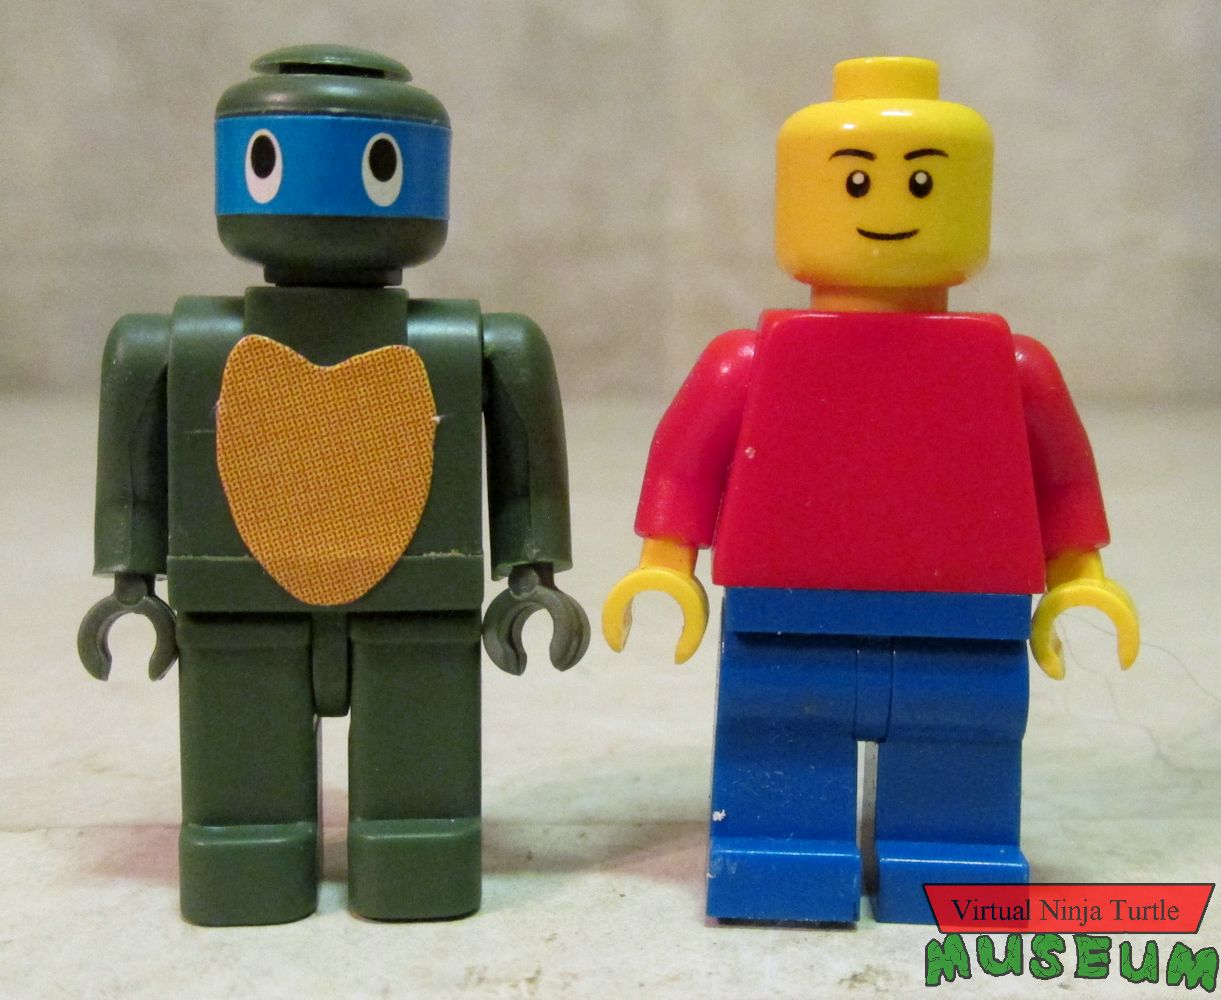 Turtle verses Lego mini figures